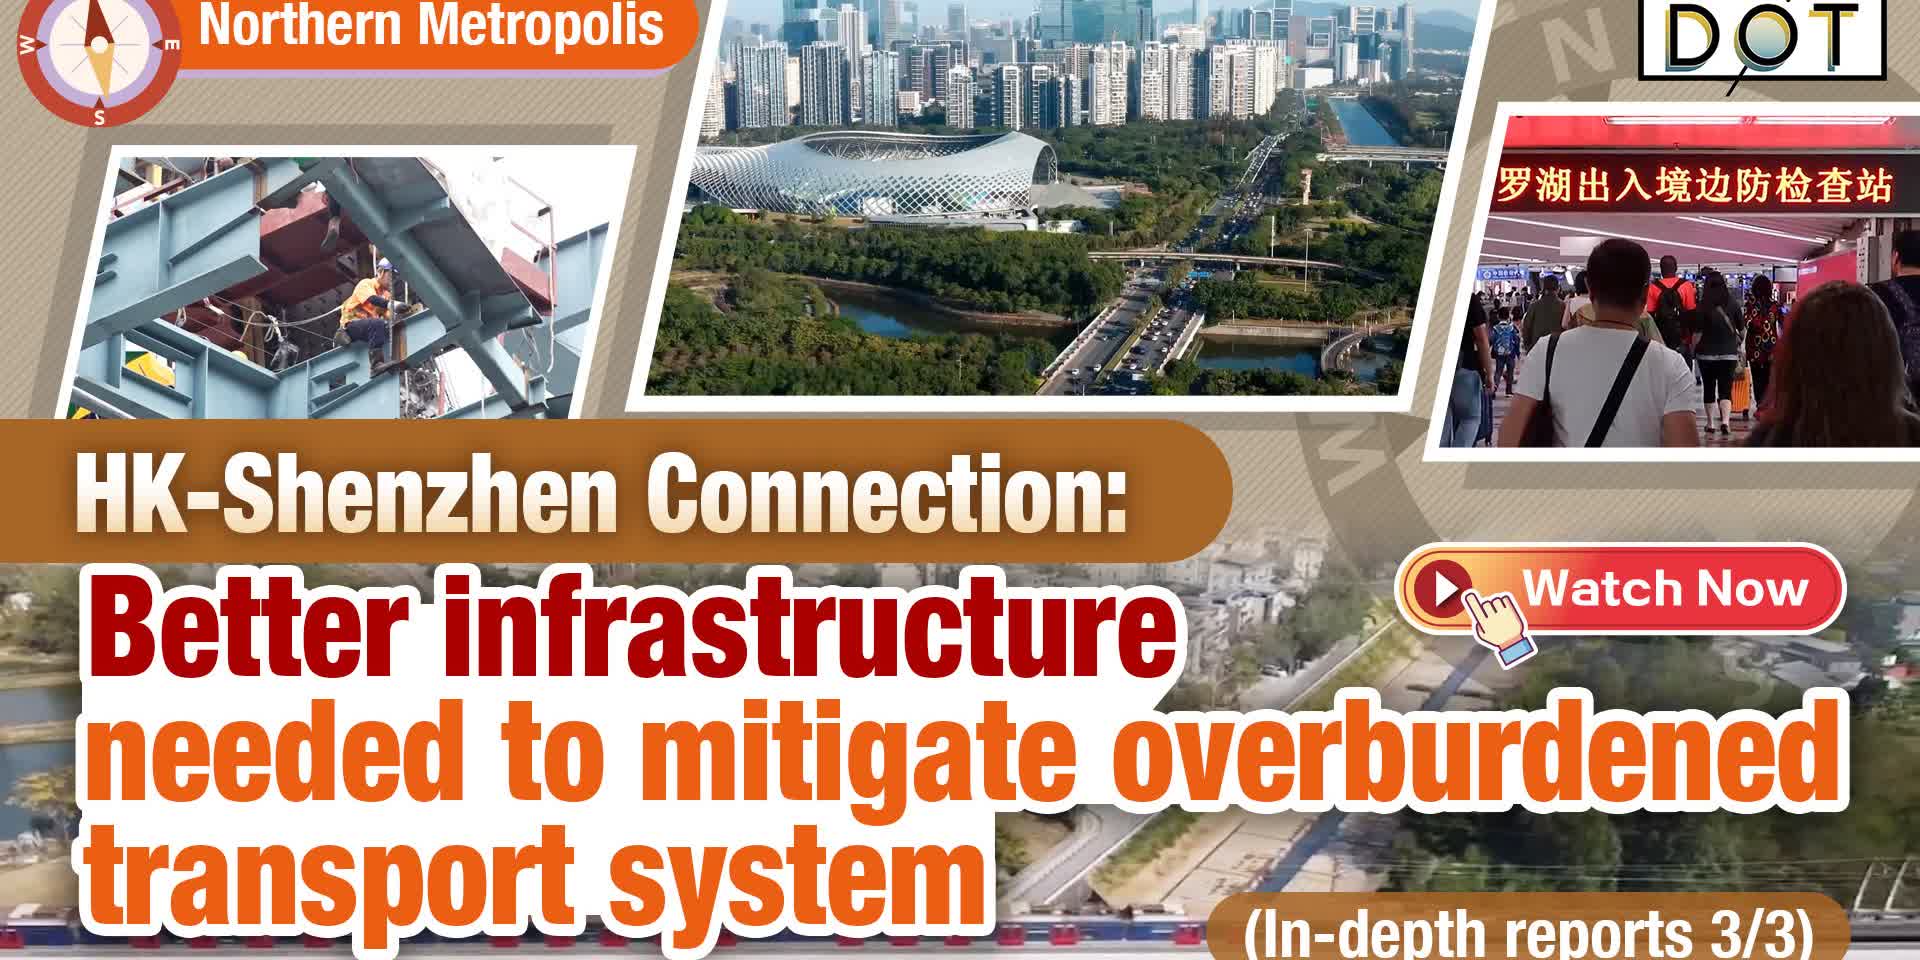 Northern Metropolis · HK-Shenzhen Connection | Better infrastructure needed to mitigate overburdened transport system